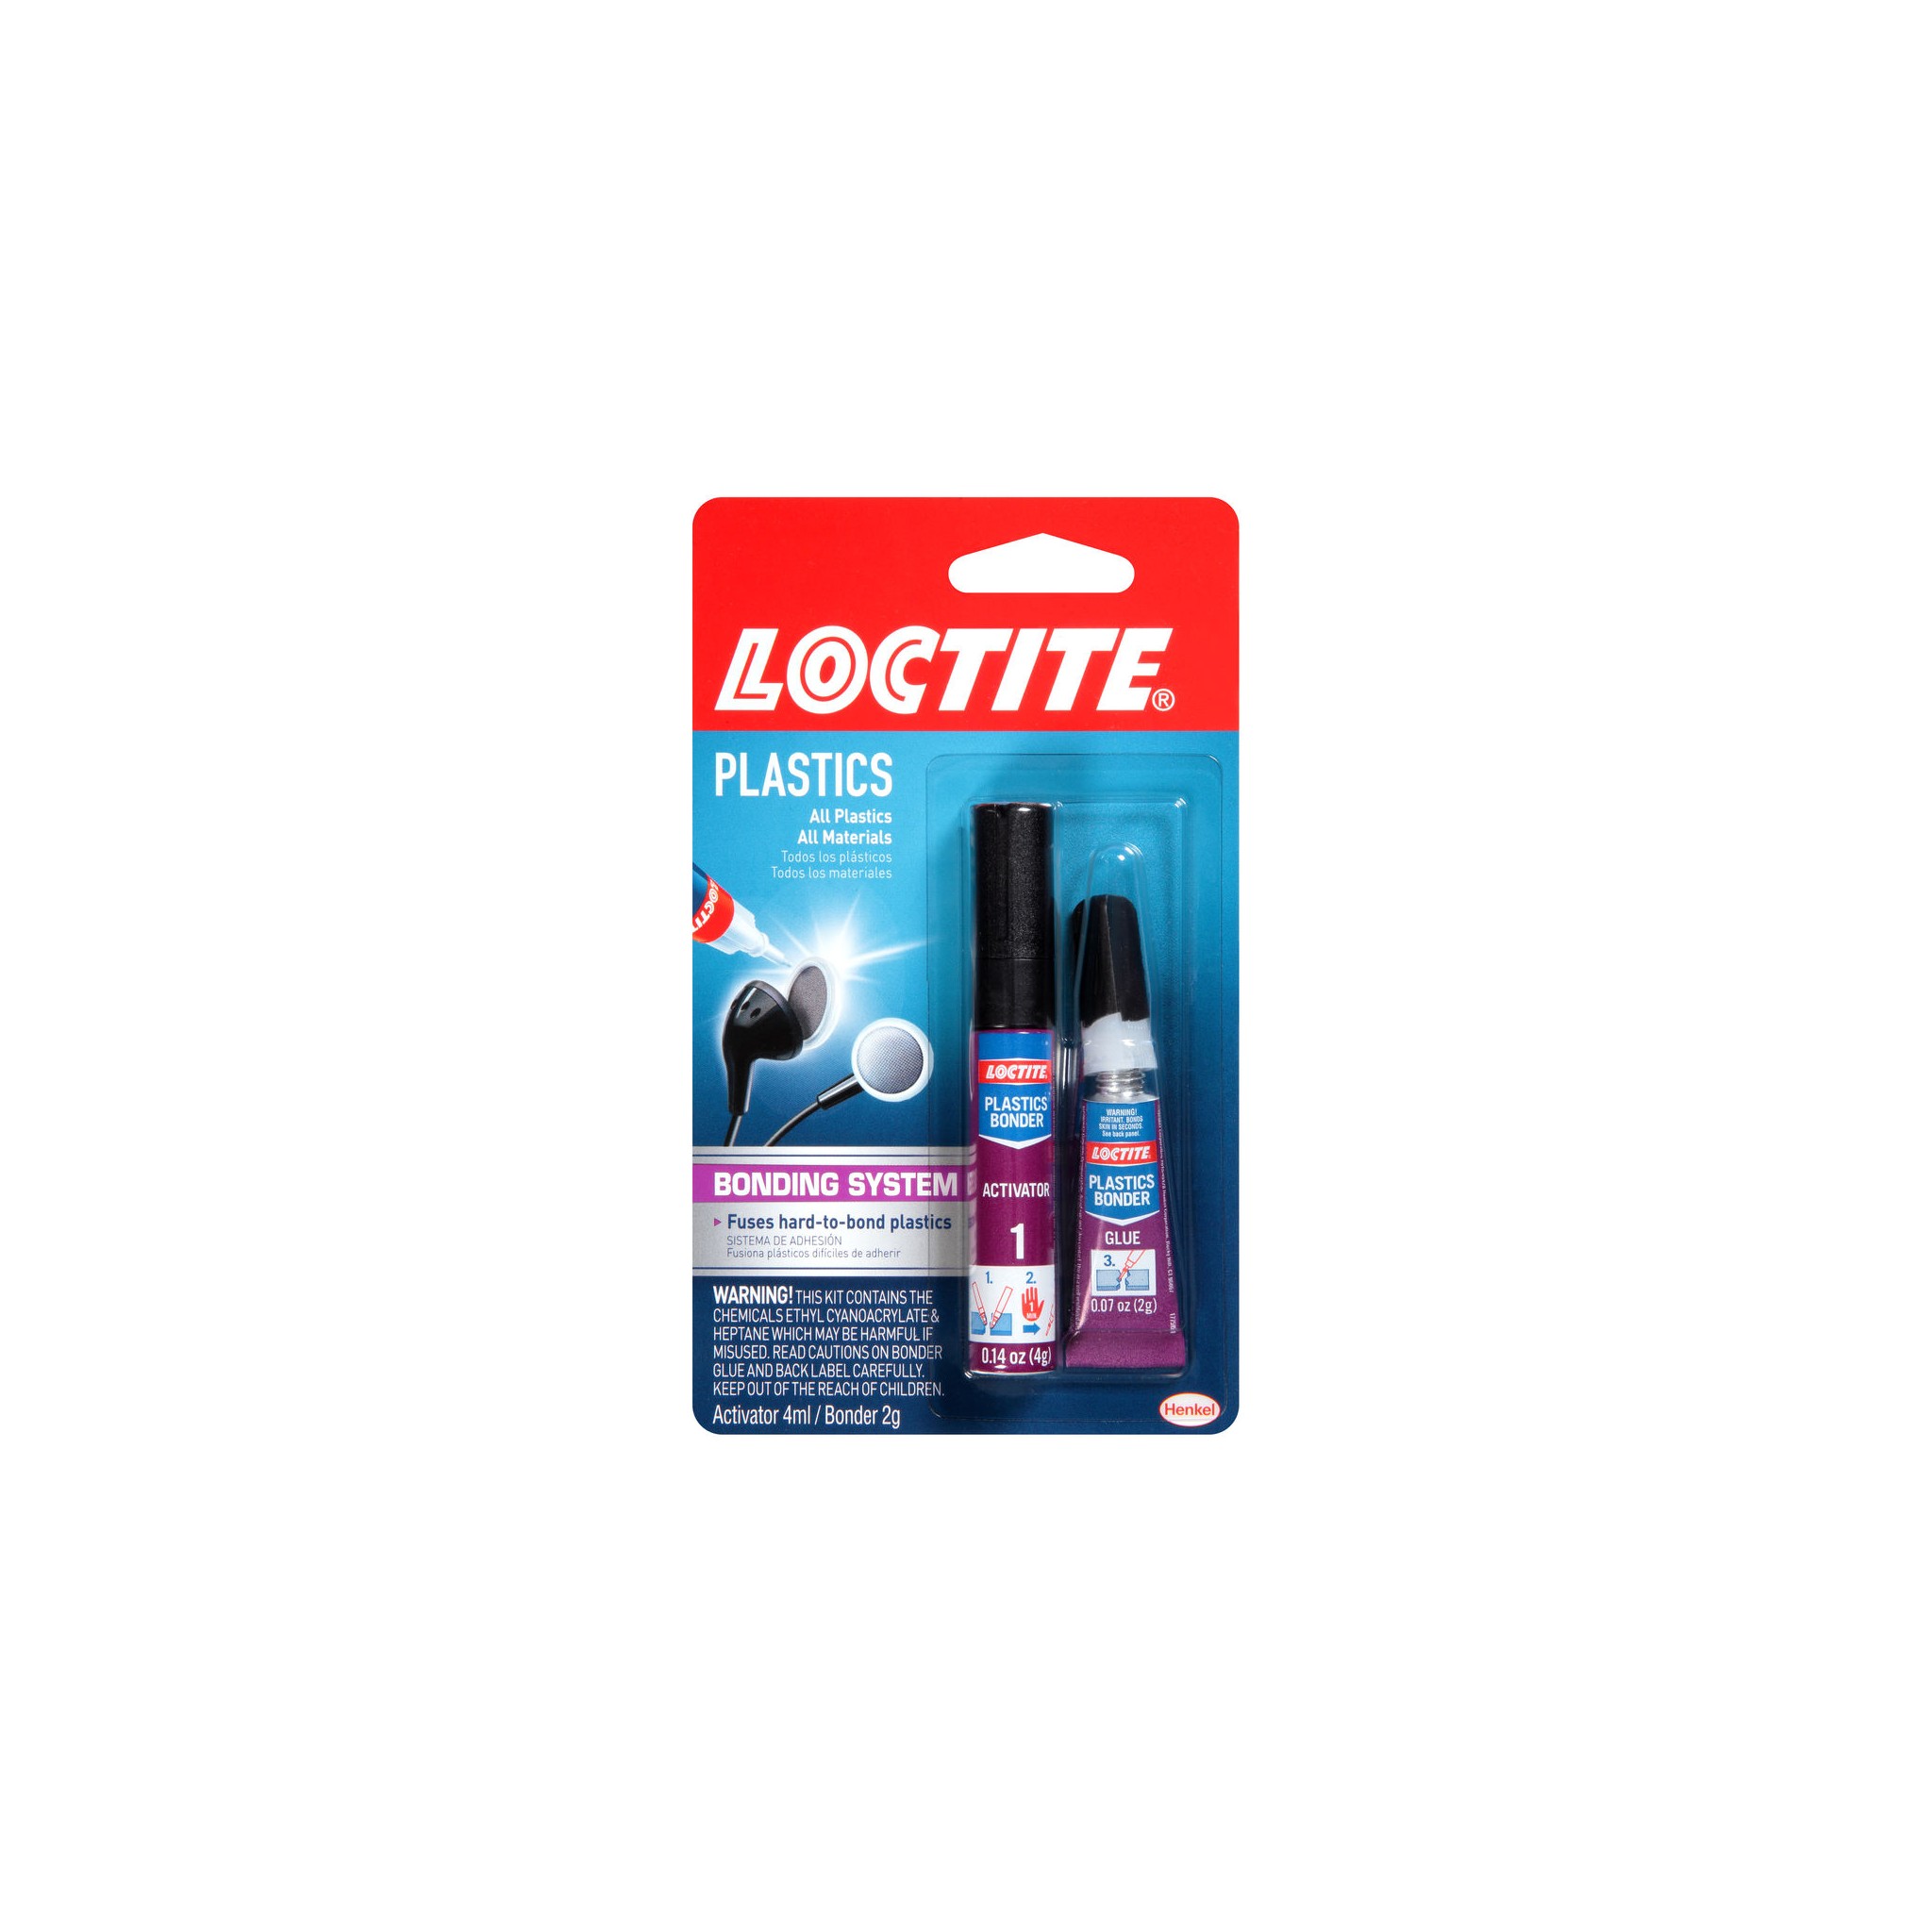 10 Pcs Henkel Loctite 406 Clear Prism Adhesive-Perfect Super Glue